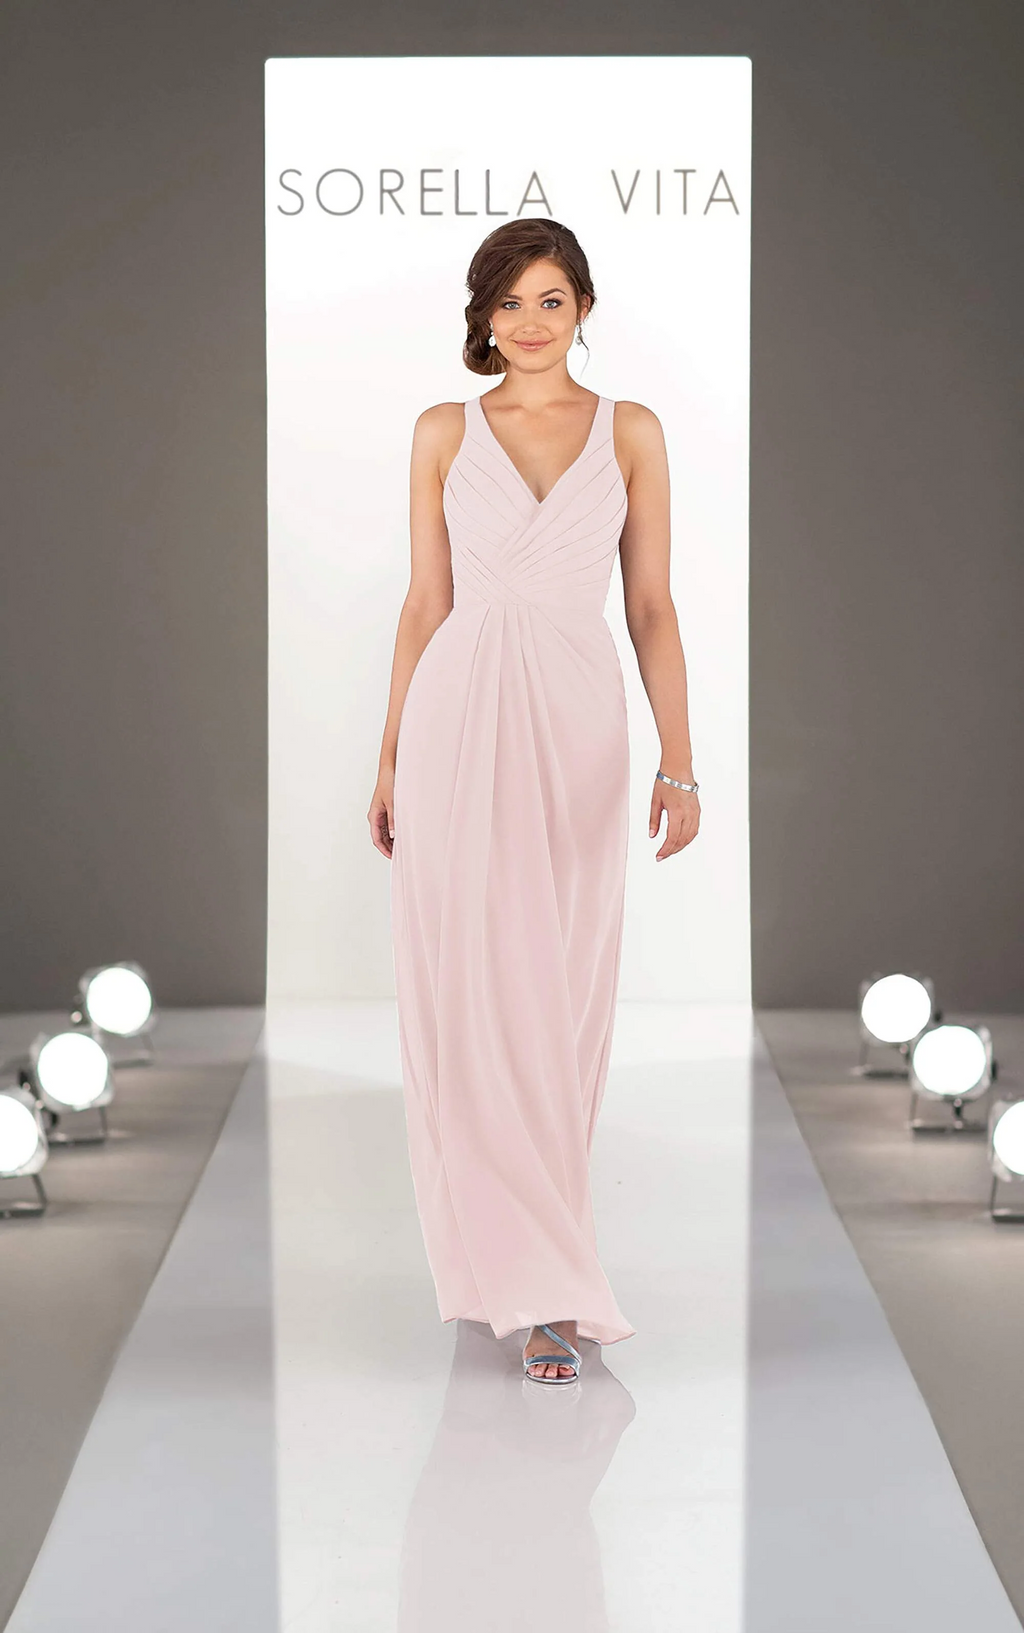 Sorella Vita Dress Style 9214  (Blush-Size 12) Prom, Ball., Black-tie, Bridesmaid, Pageant (Copy) (Copy) (Copy)